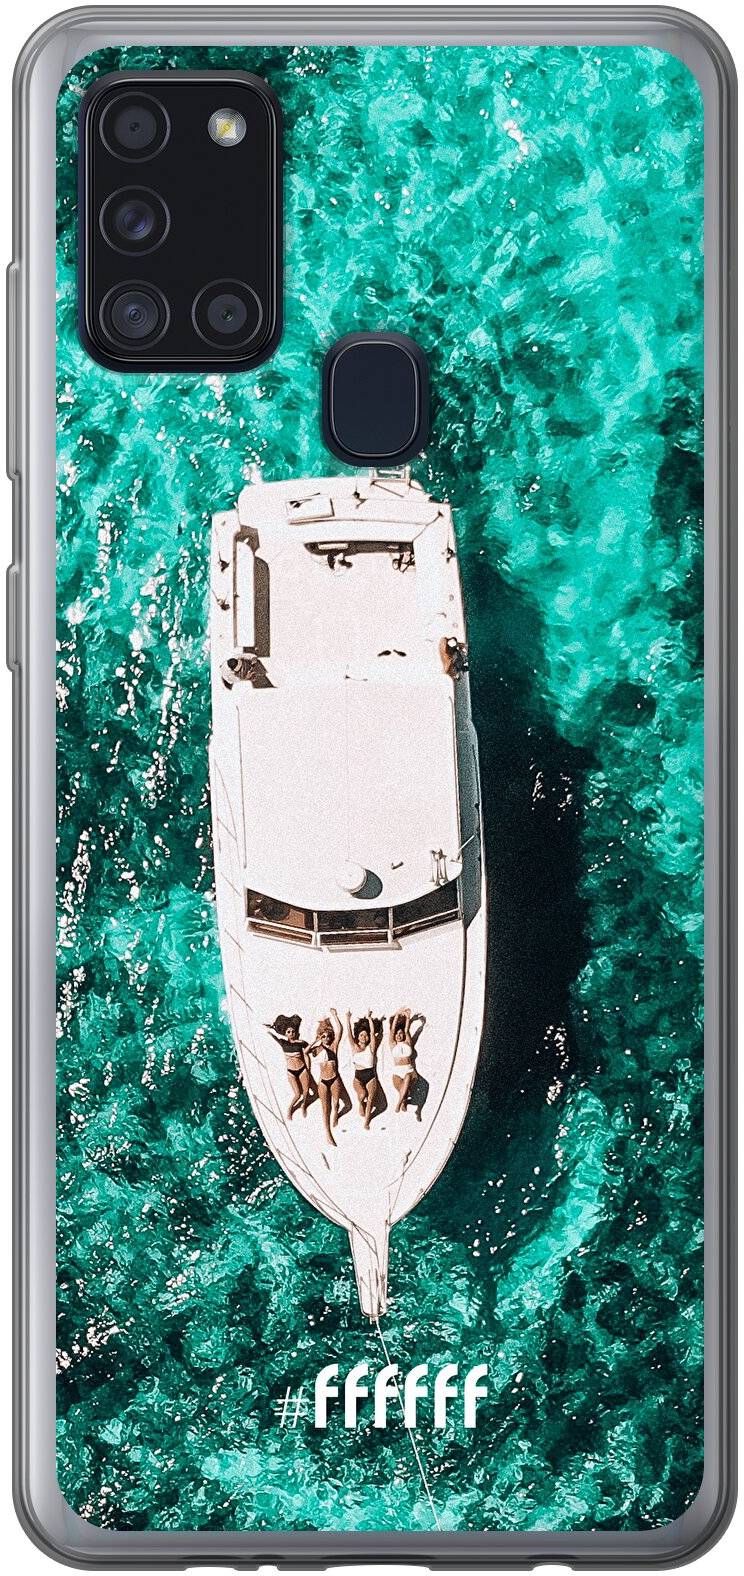 Yacht Life Galaxy A21s